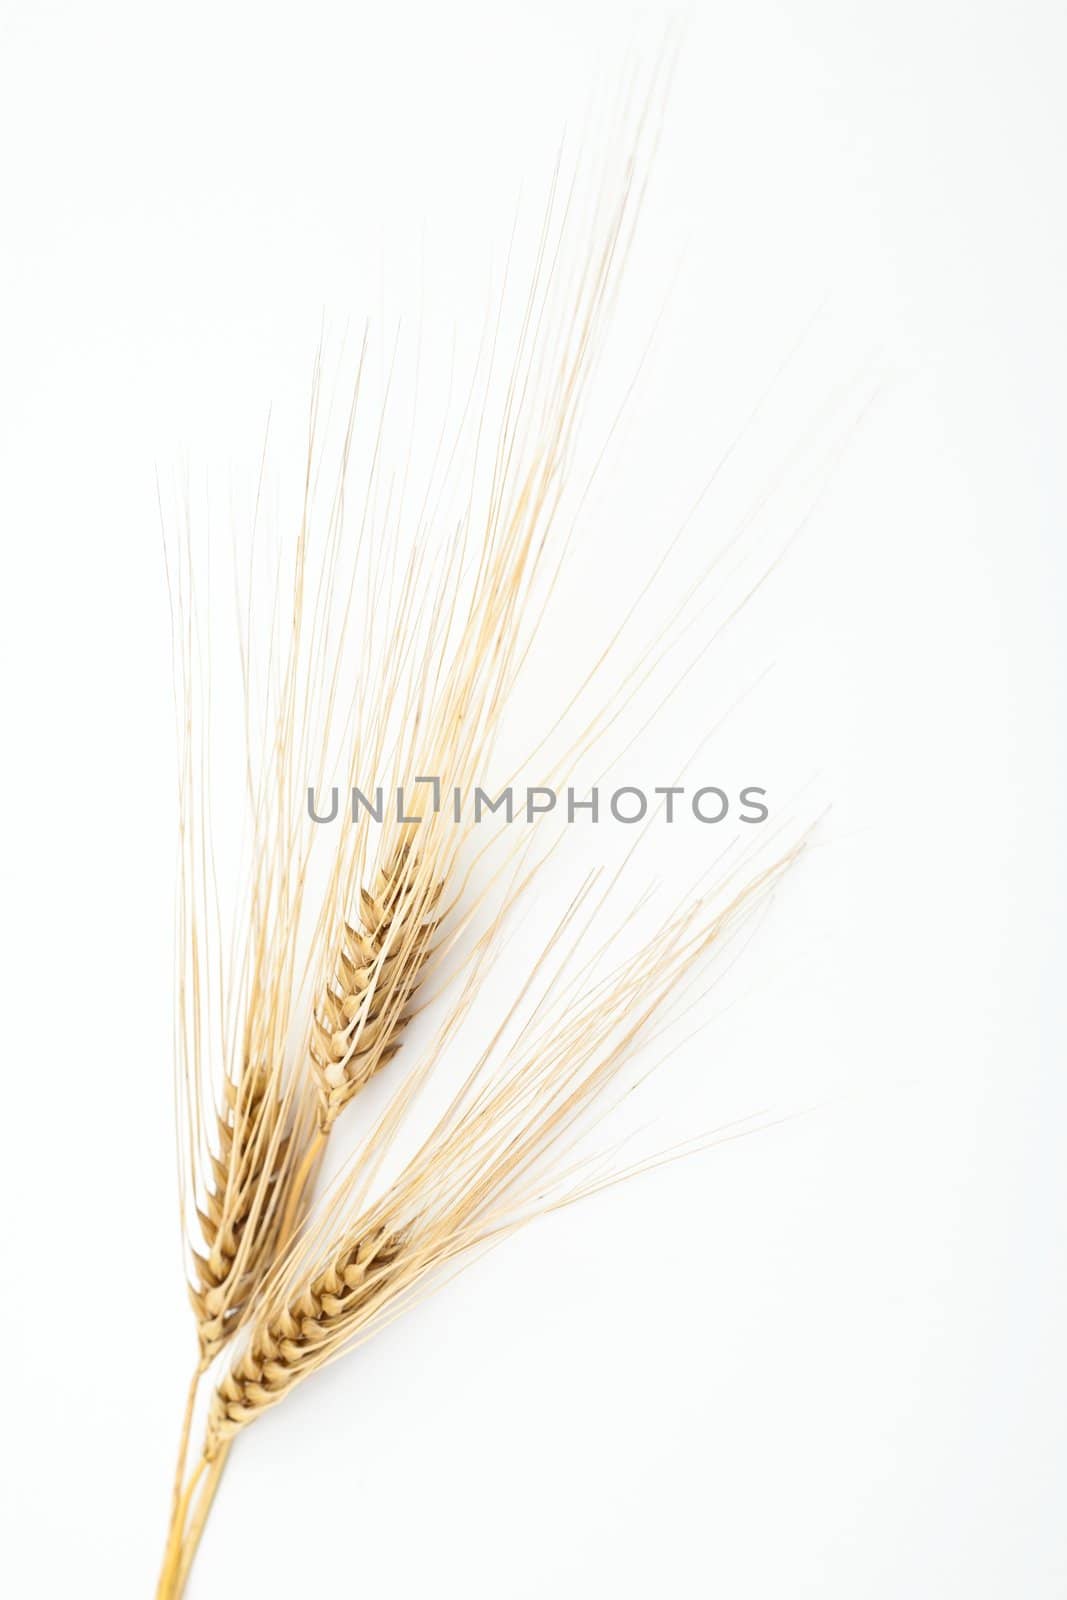 An image of three ears of ripe barley